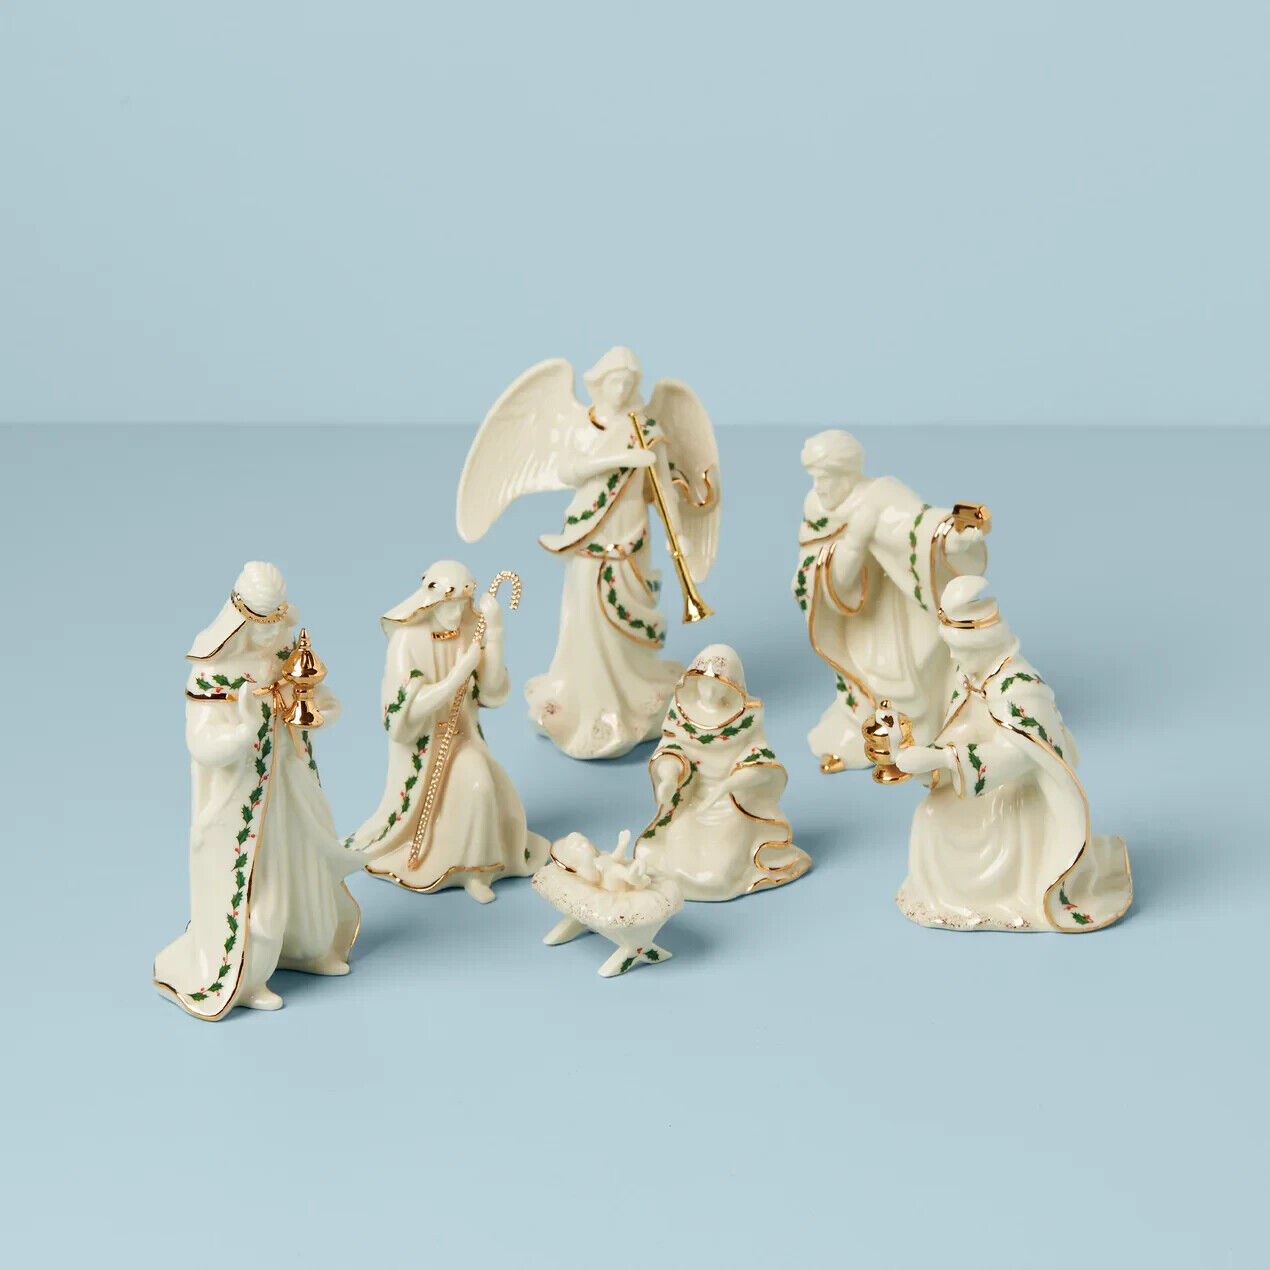 Lenox Holiday 7 Piece Mini Nativity Set Porcelain Item #806053 NEW